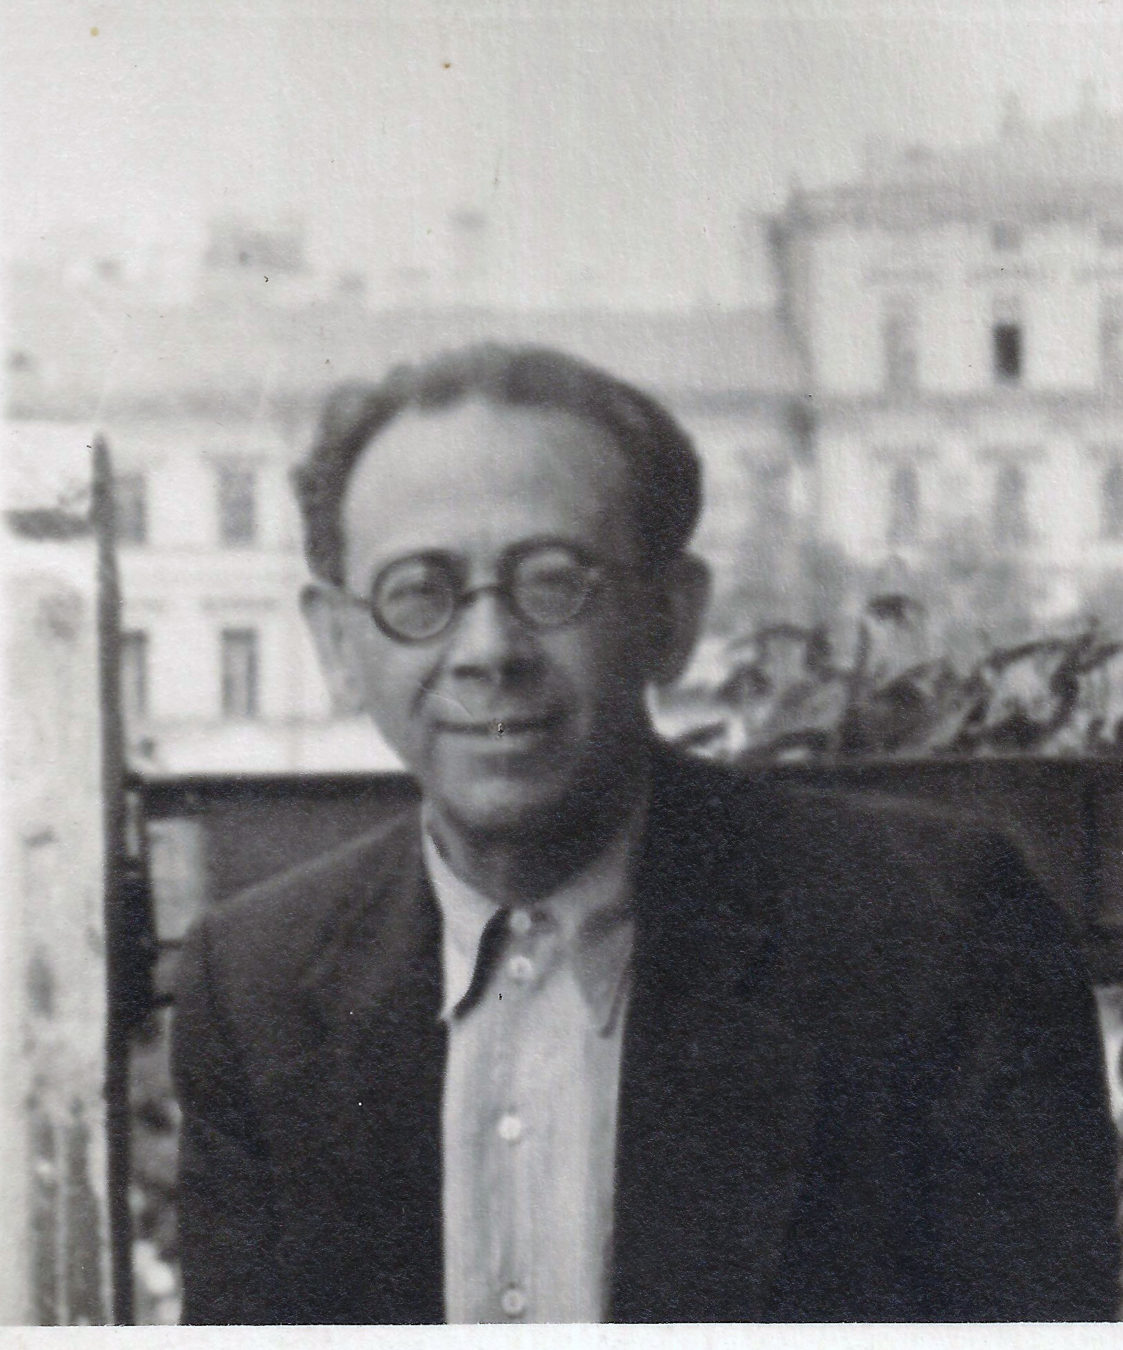 El etnomusicólogo judío soviético Moisei Beregovsky (cortesía de Dmitry Baevsky)